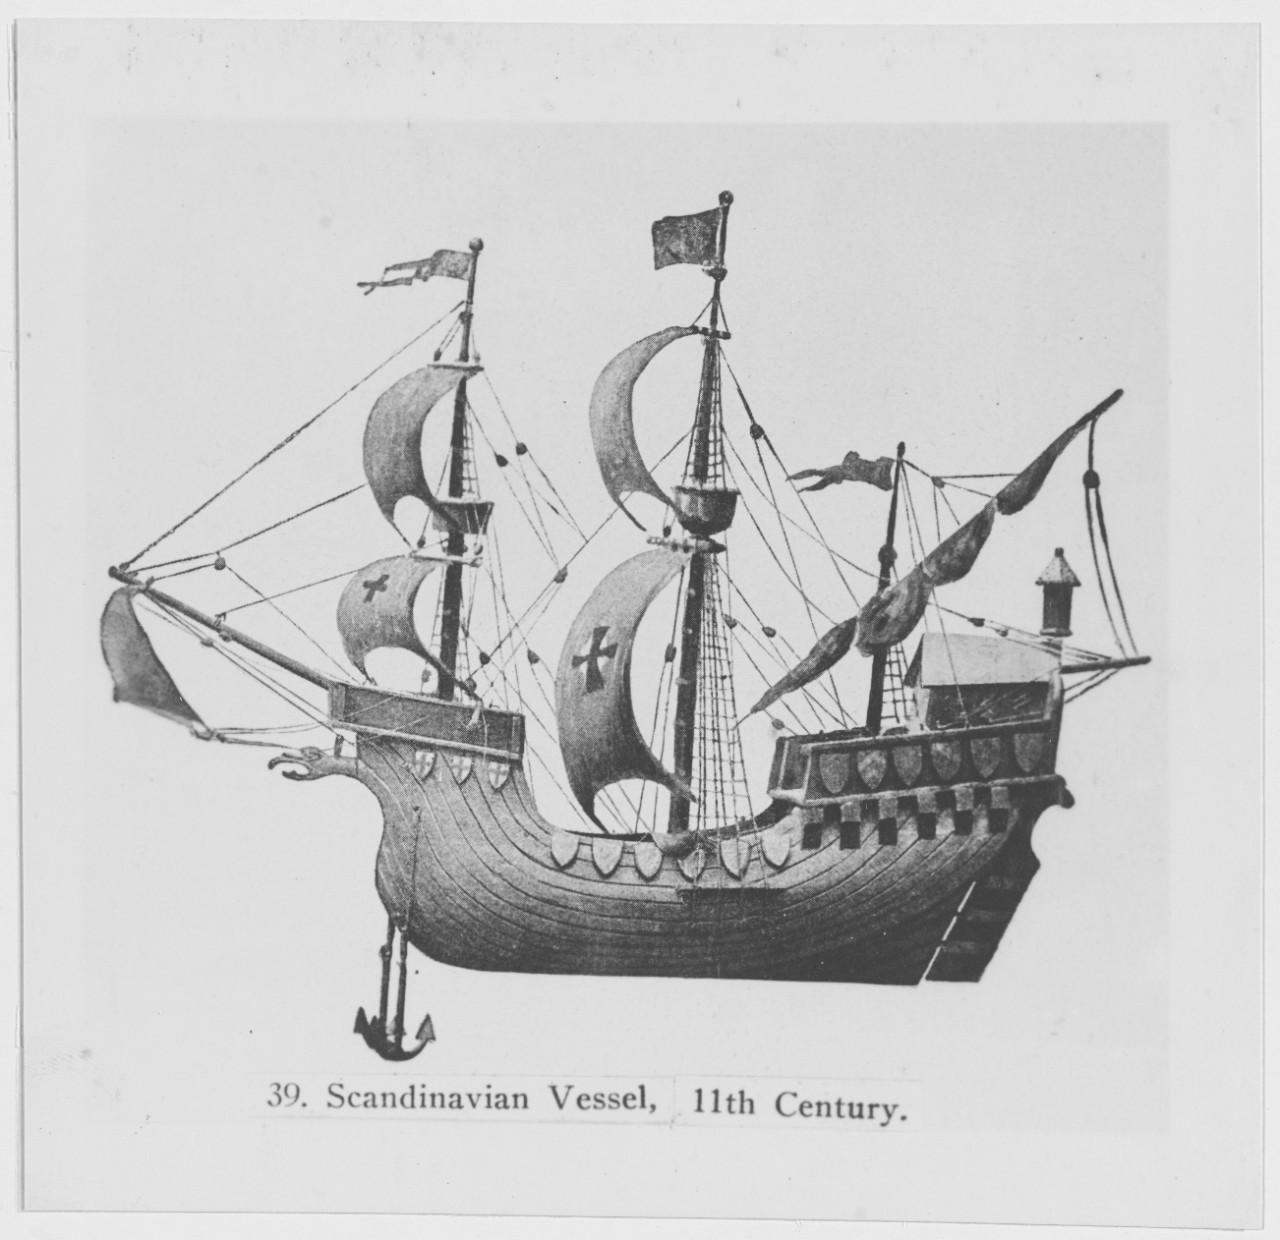 Model of Scandinavian Vessel, 11th Century